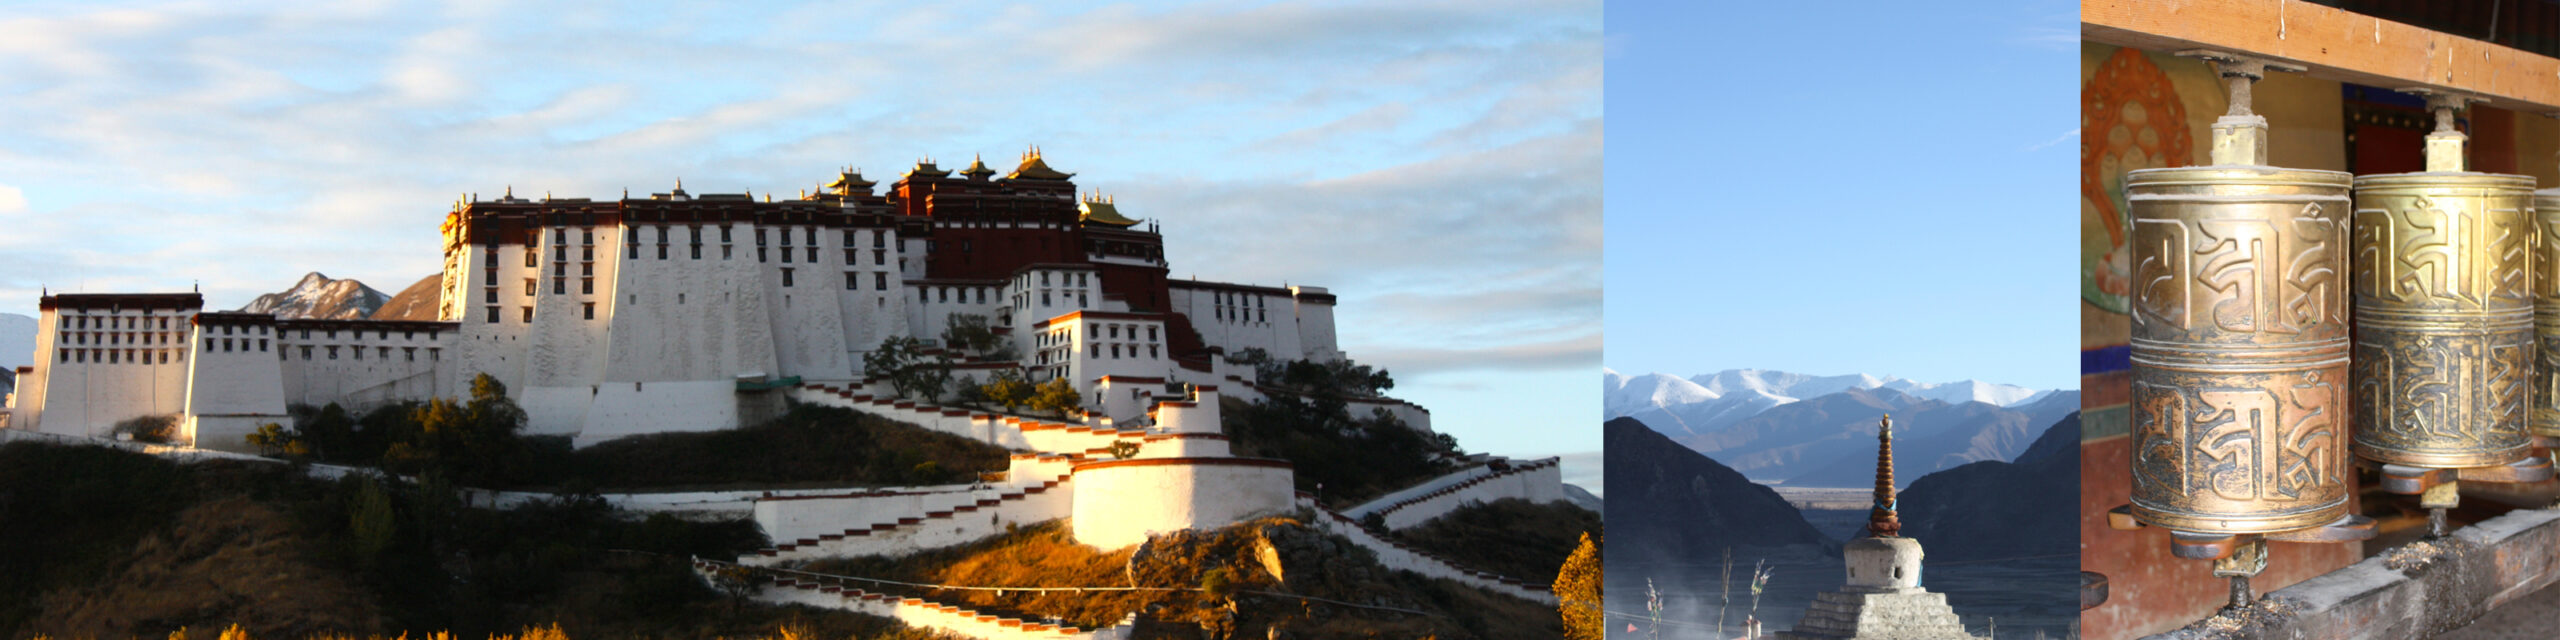 Images of Tibet: the Potala at sunrise; a chorten; prayer wheels in Lhasa